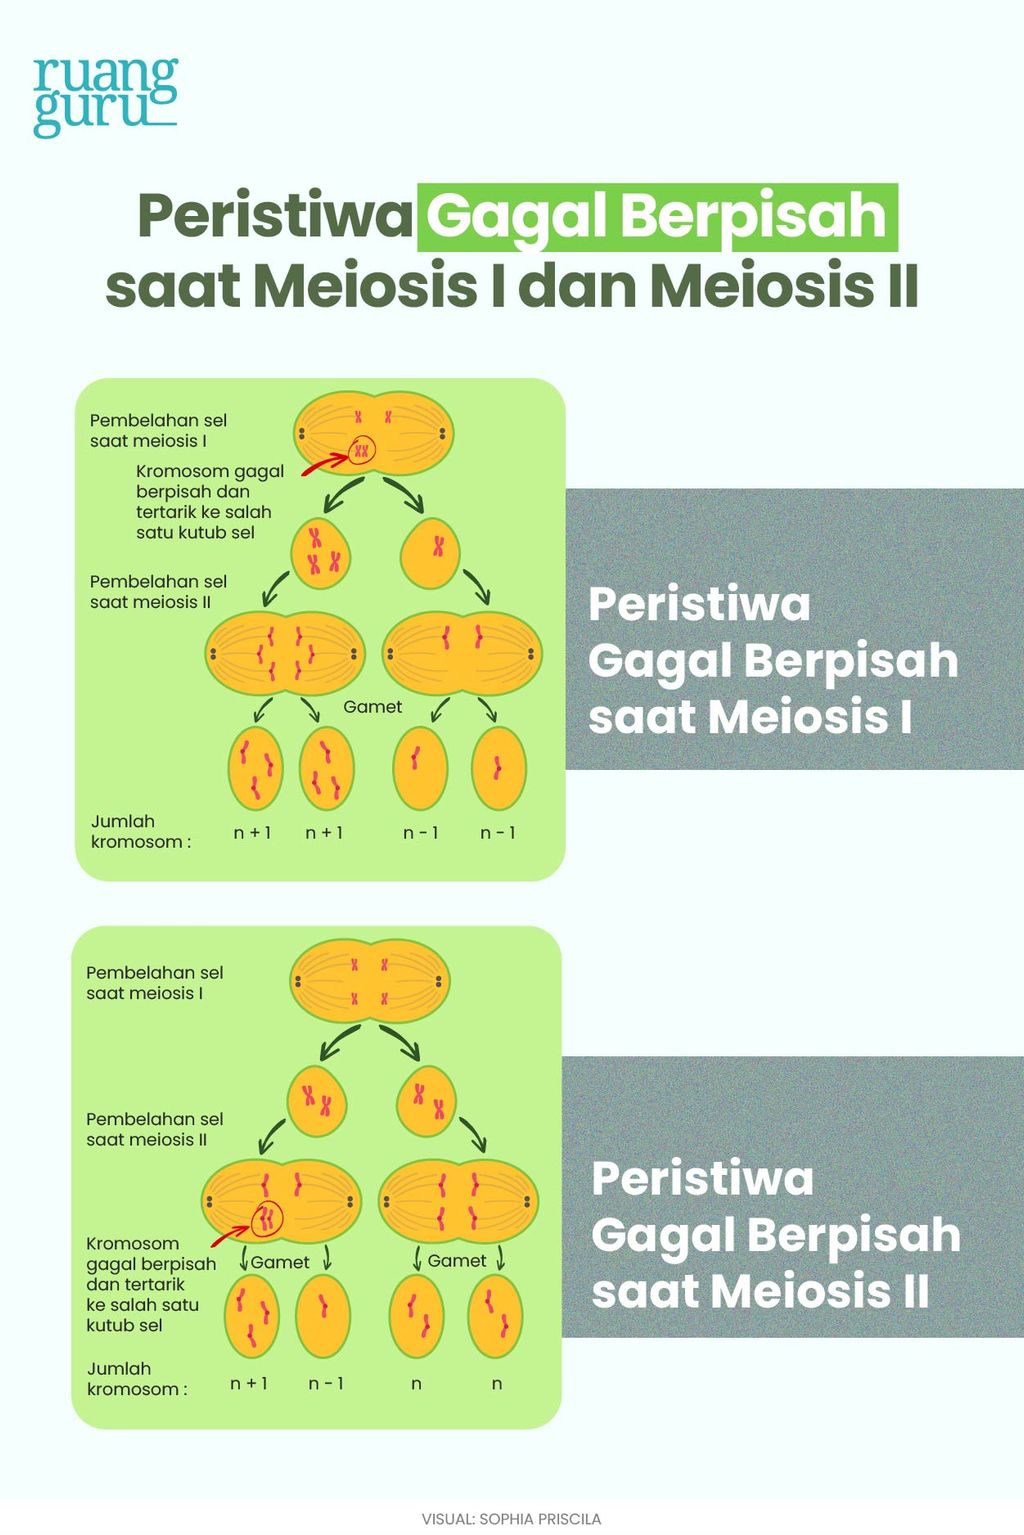 Peristiwa gagal berpisah meiosis I dan meiosis II